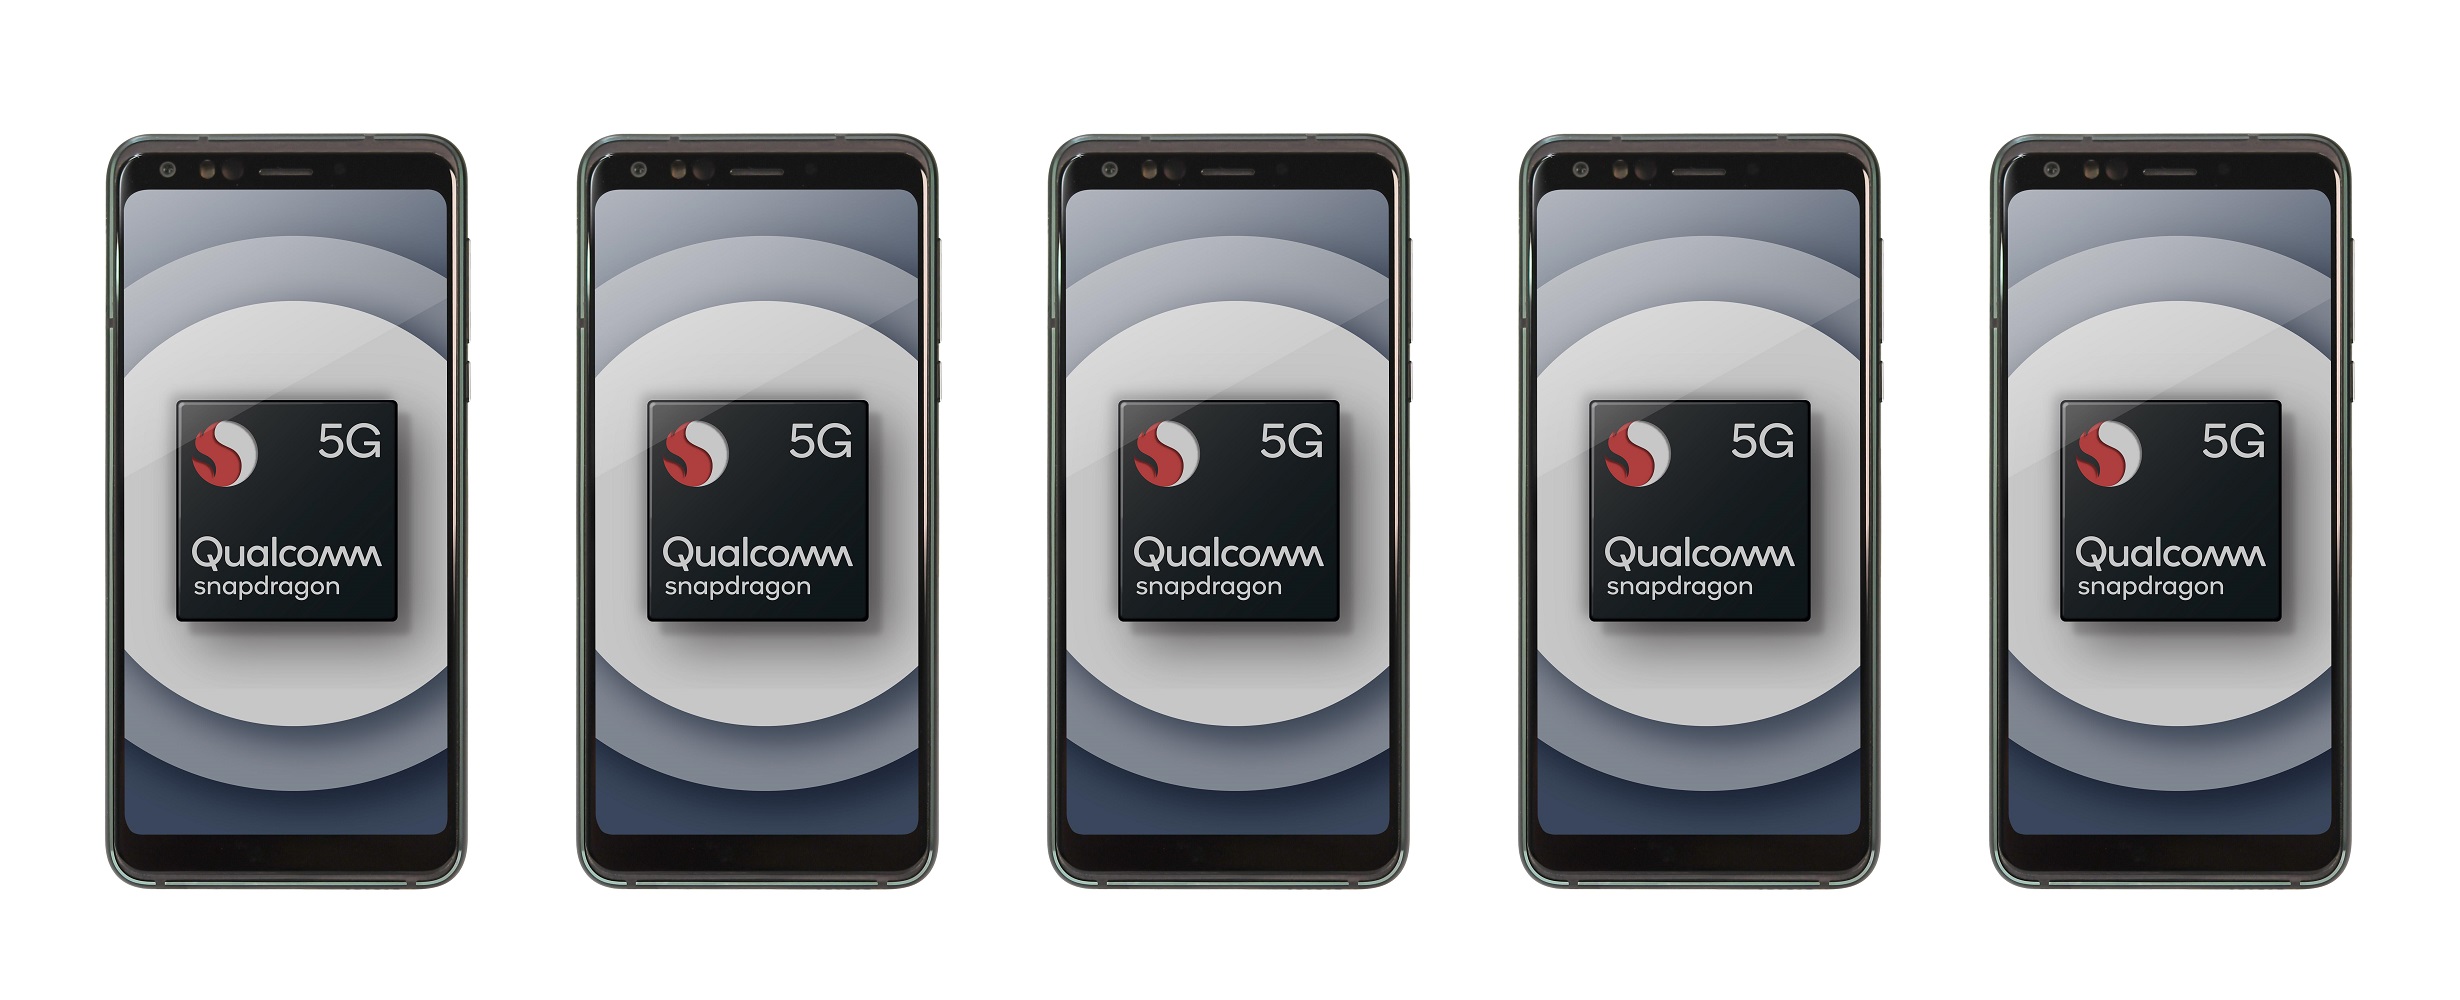 procesor Qualcomm Snapdragon 5G